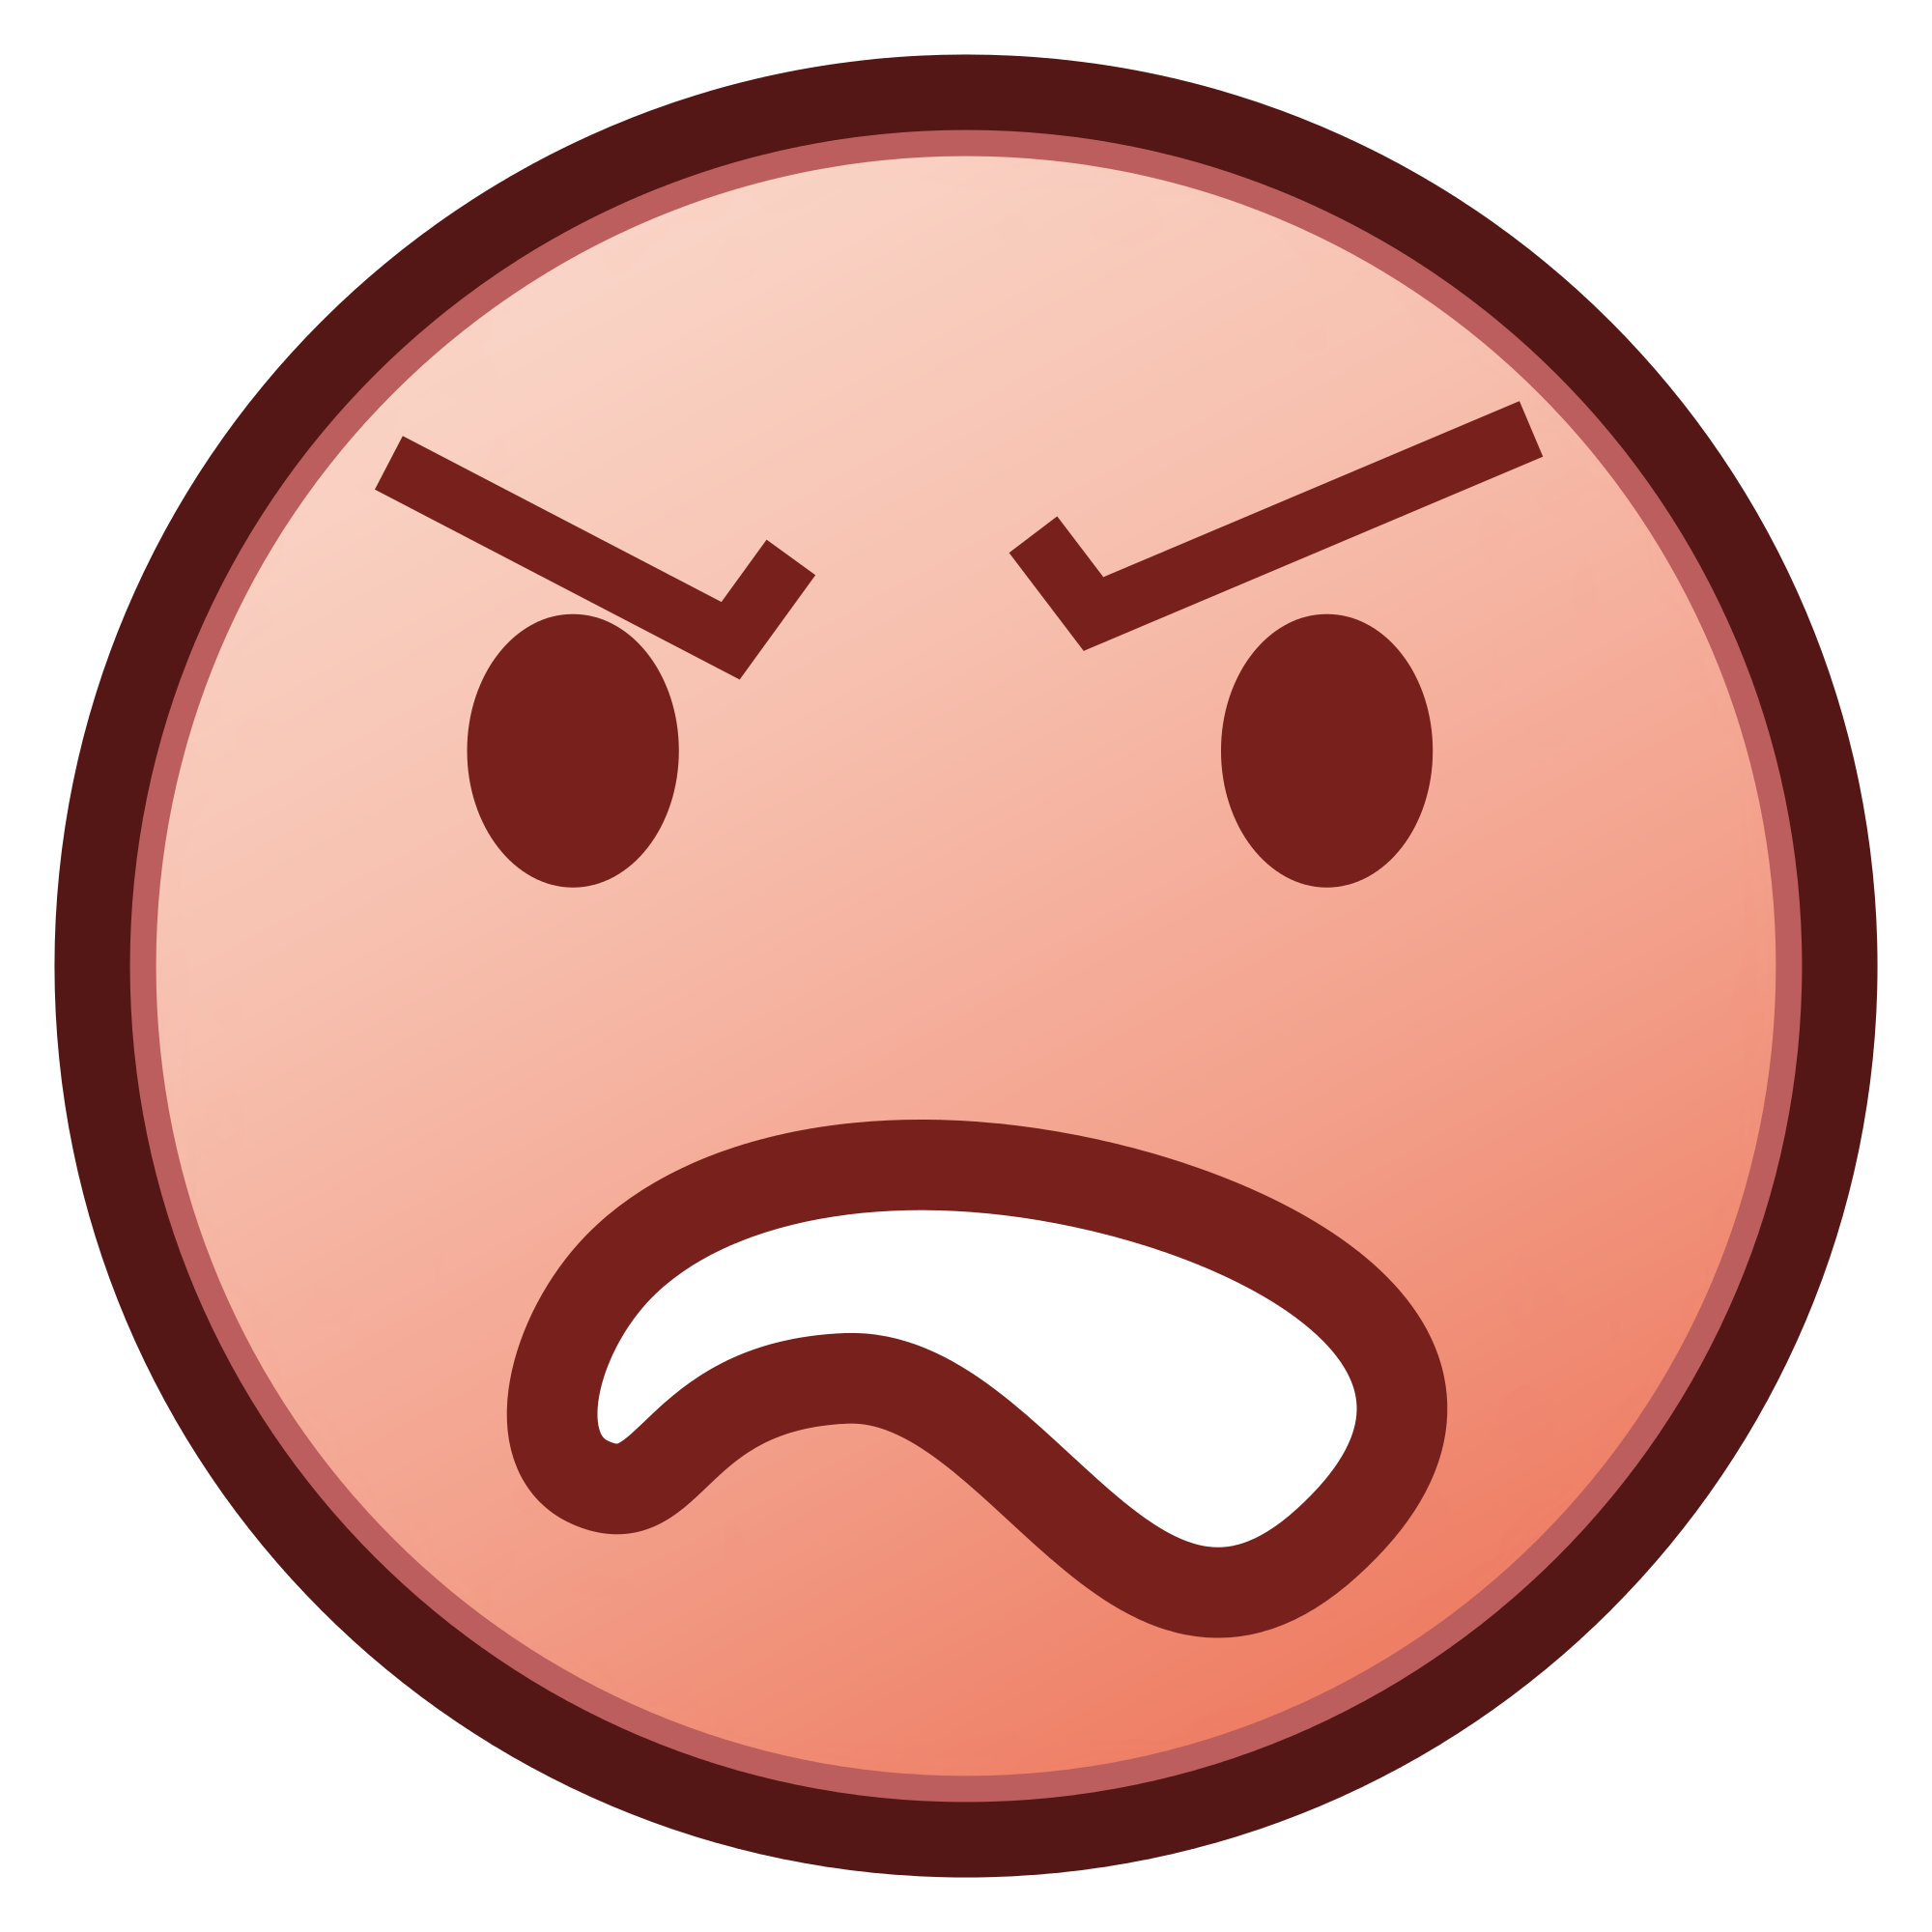 Angry Emoji PNG Free Download